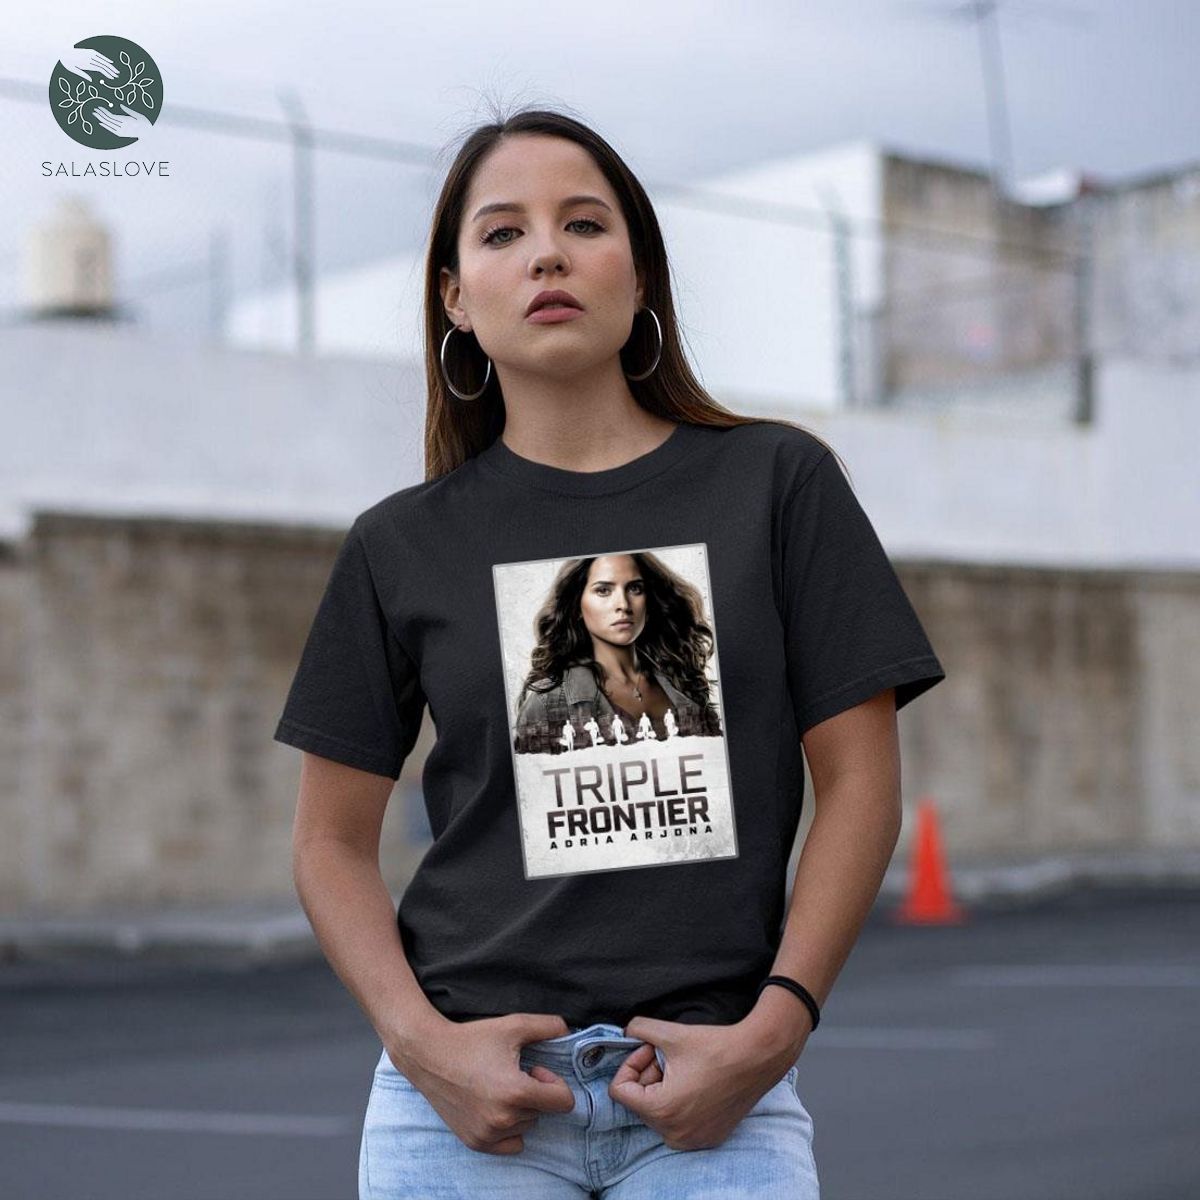 Adria Arjona On Triple Frontier Movie T-shirt